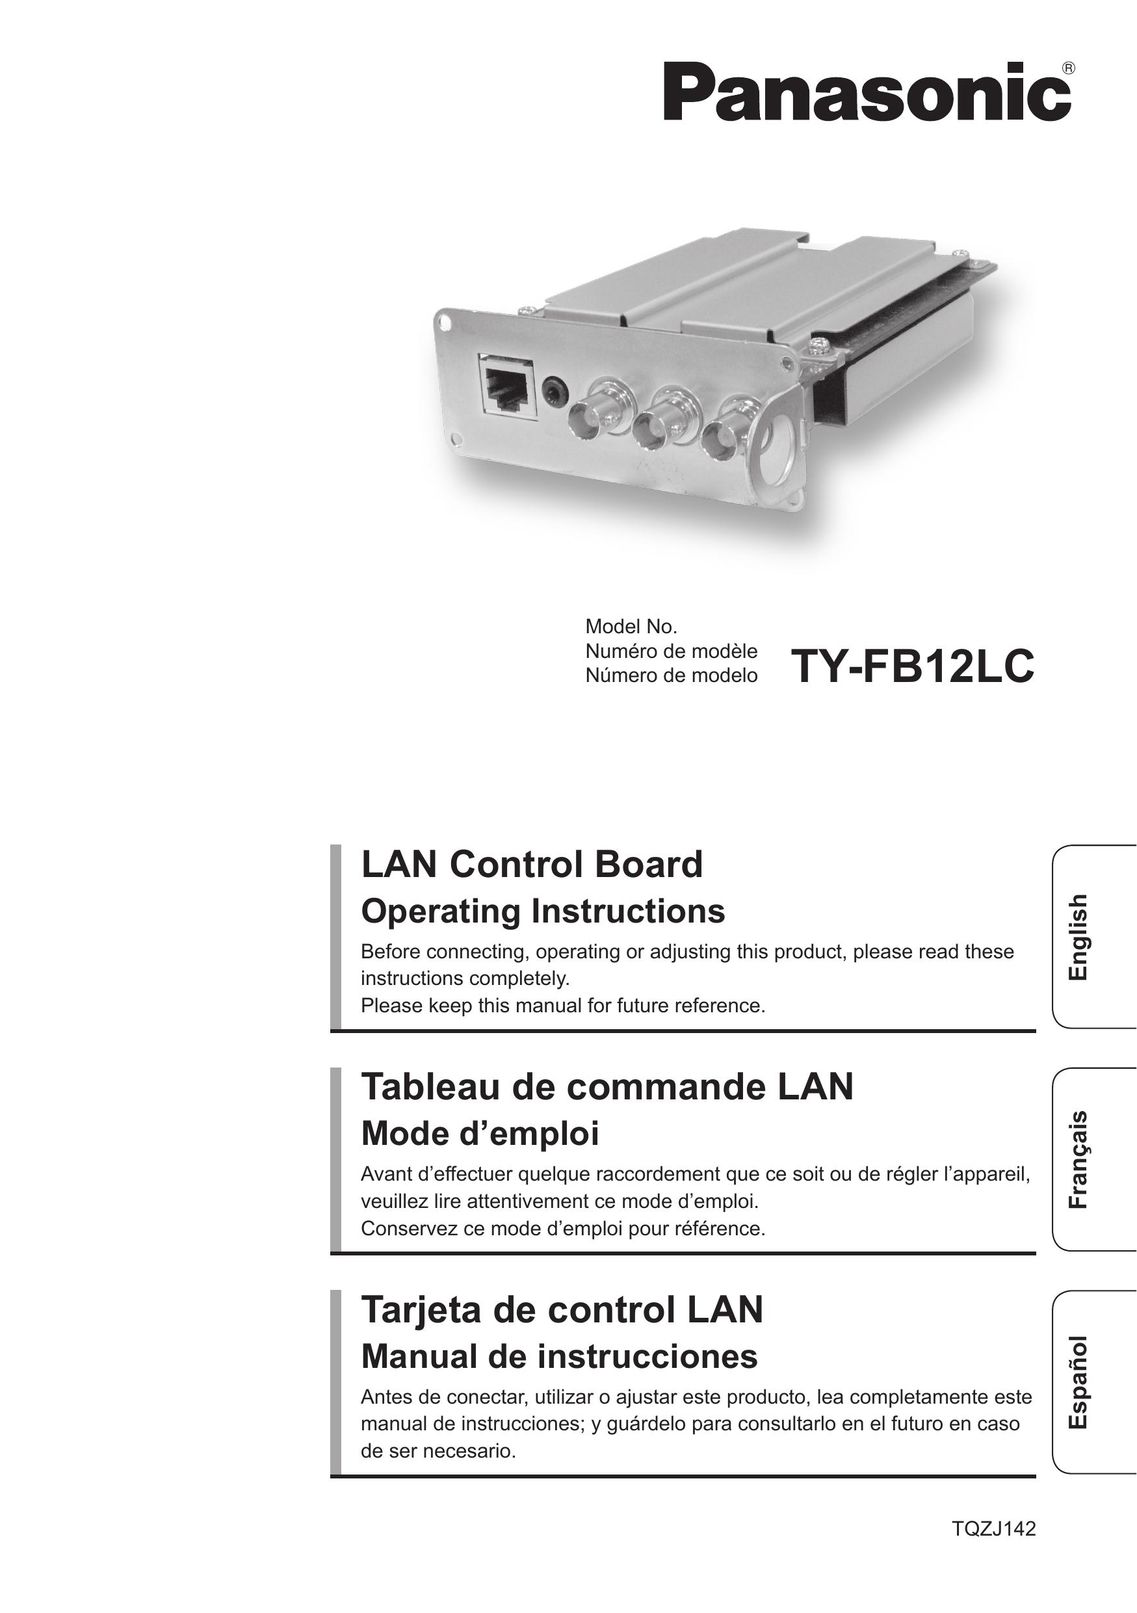 Panasonic TY-FB12LC Video Game Controller User Manual